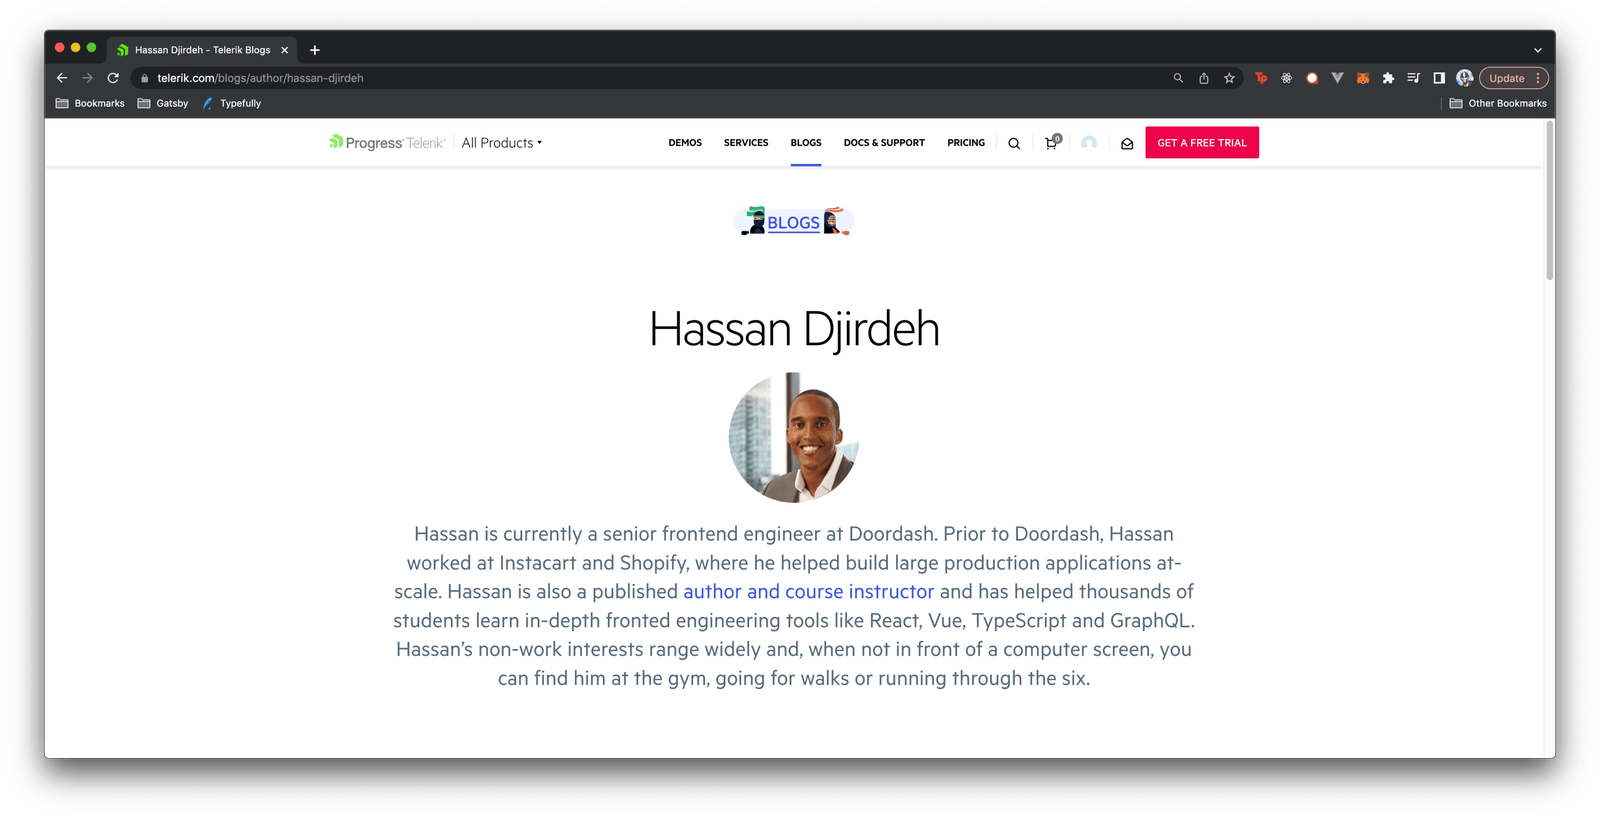 Hassan Djirdeh's author profile page on the Progress Telerik website